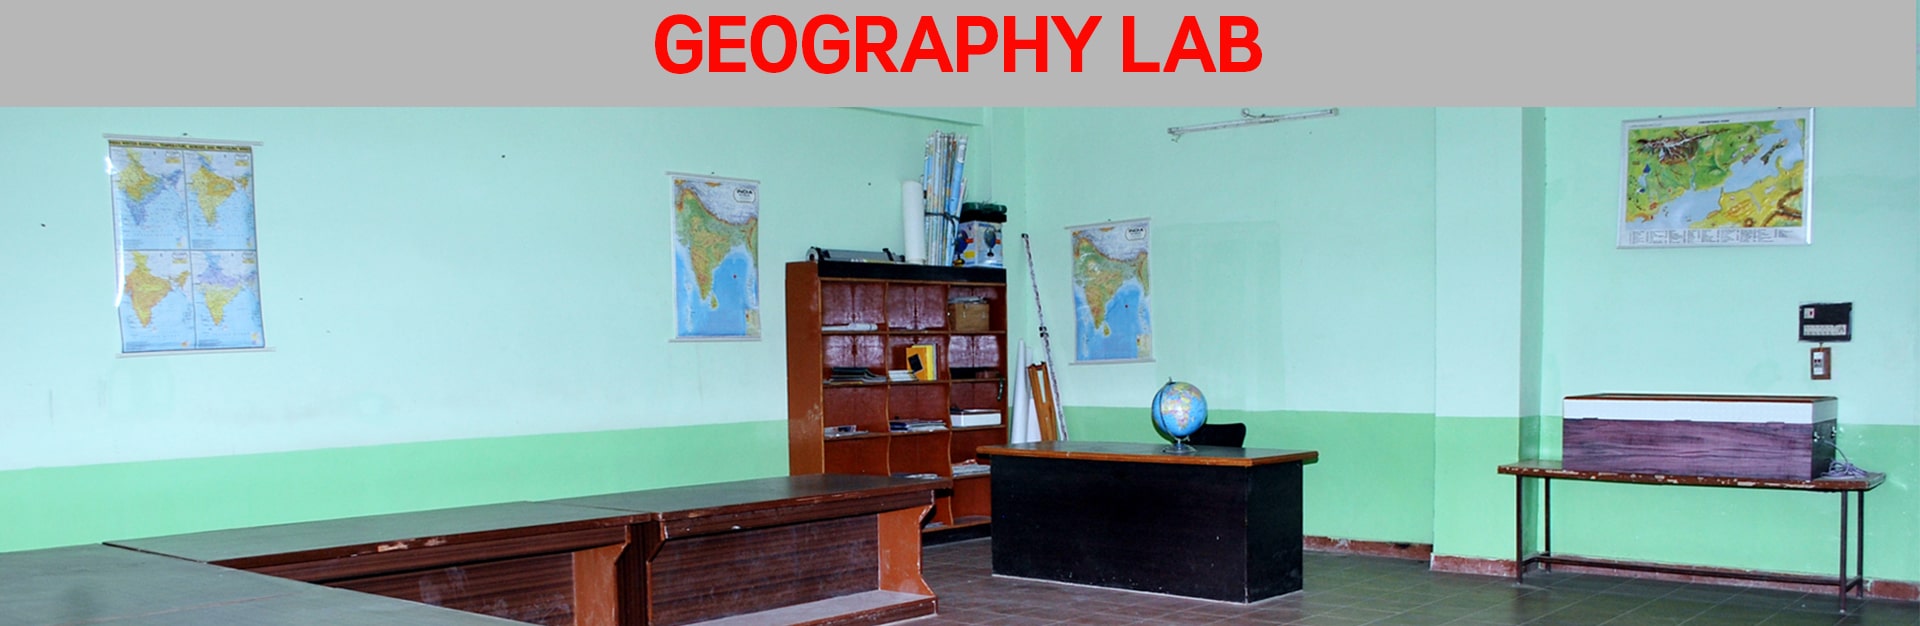 Geography Lab